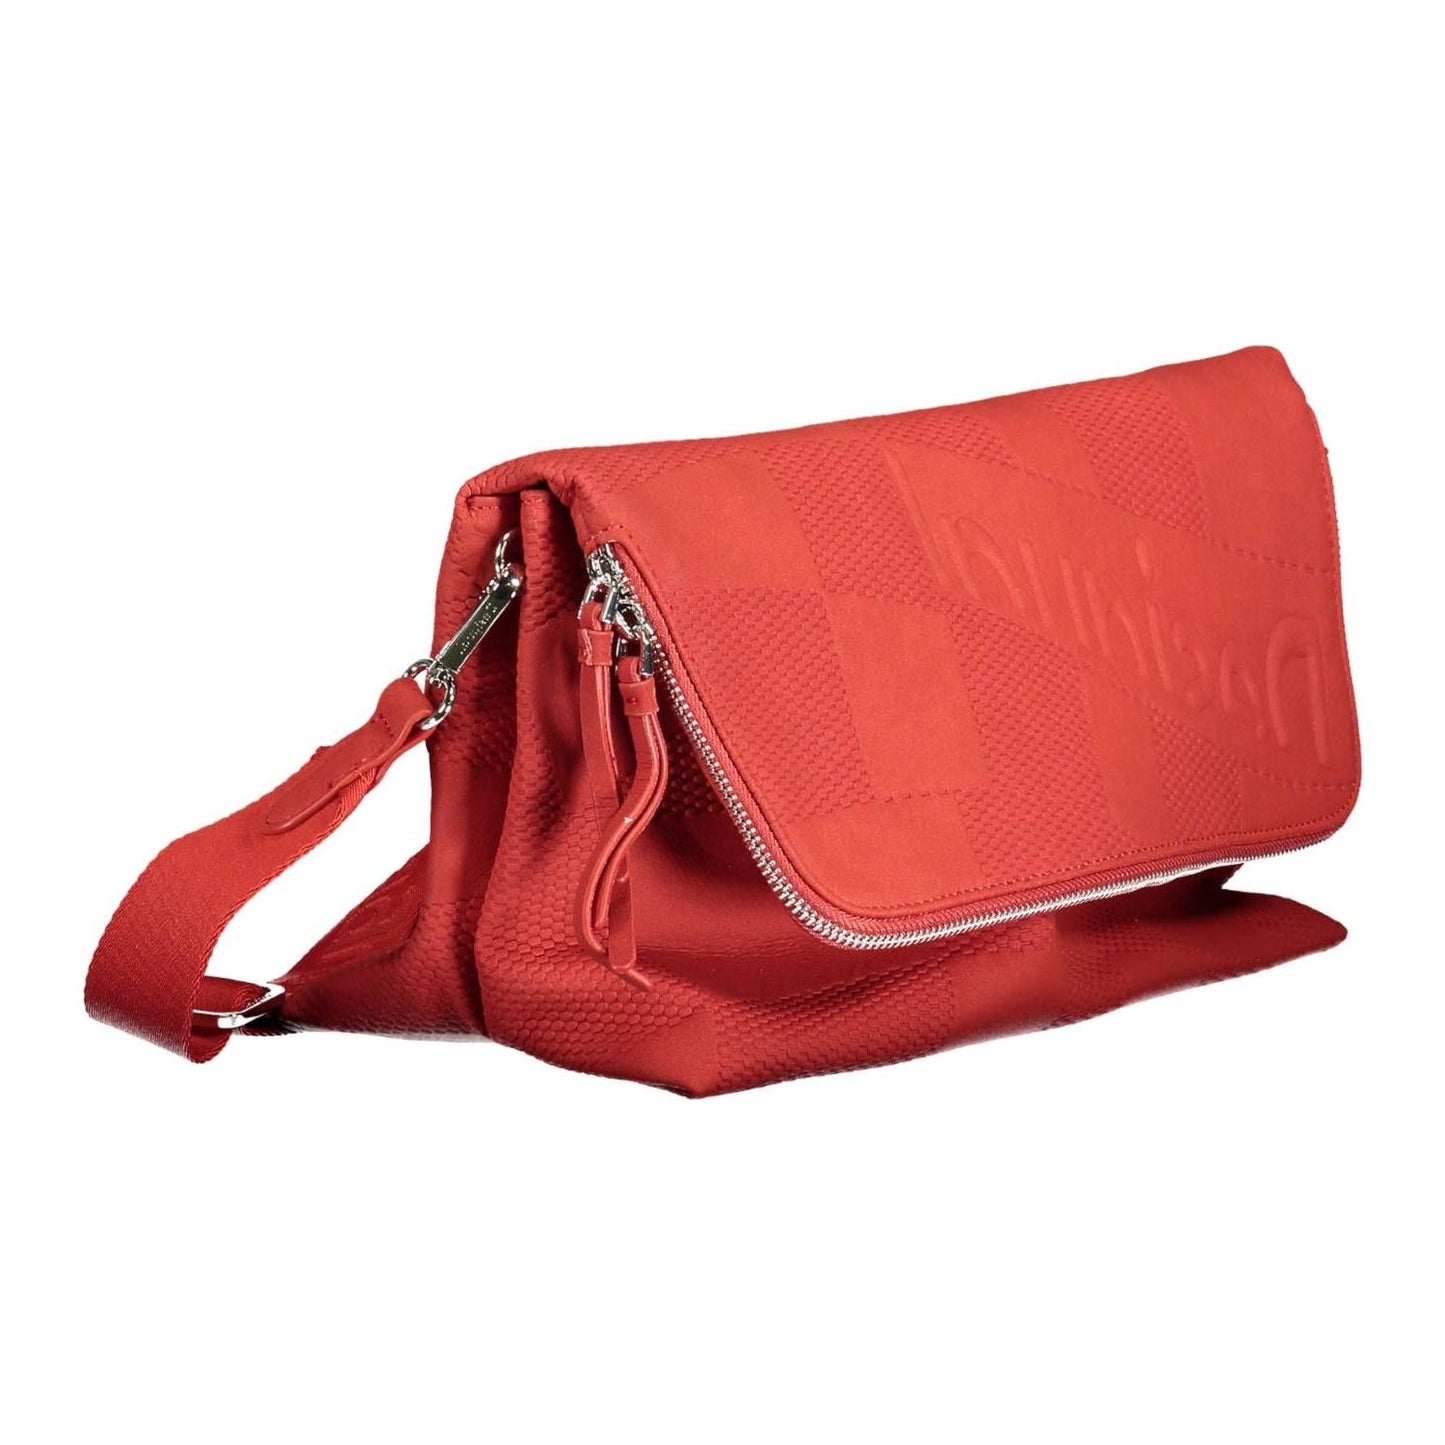 Desigual Chic Red Polyurethane Handbag with Multiple Compartments chic-red-polyurethane-handbag-with-multiple-compartments